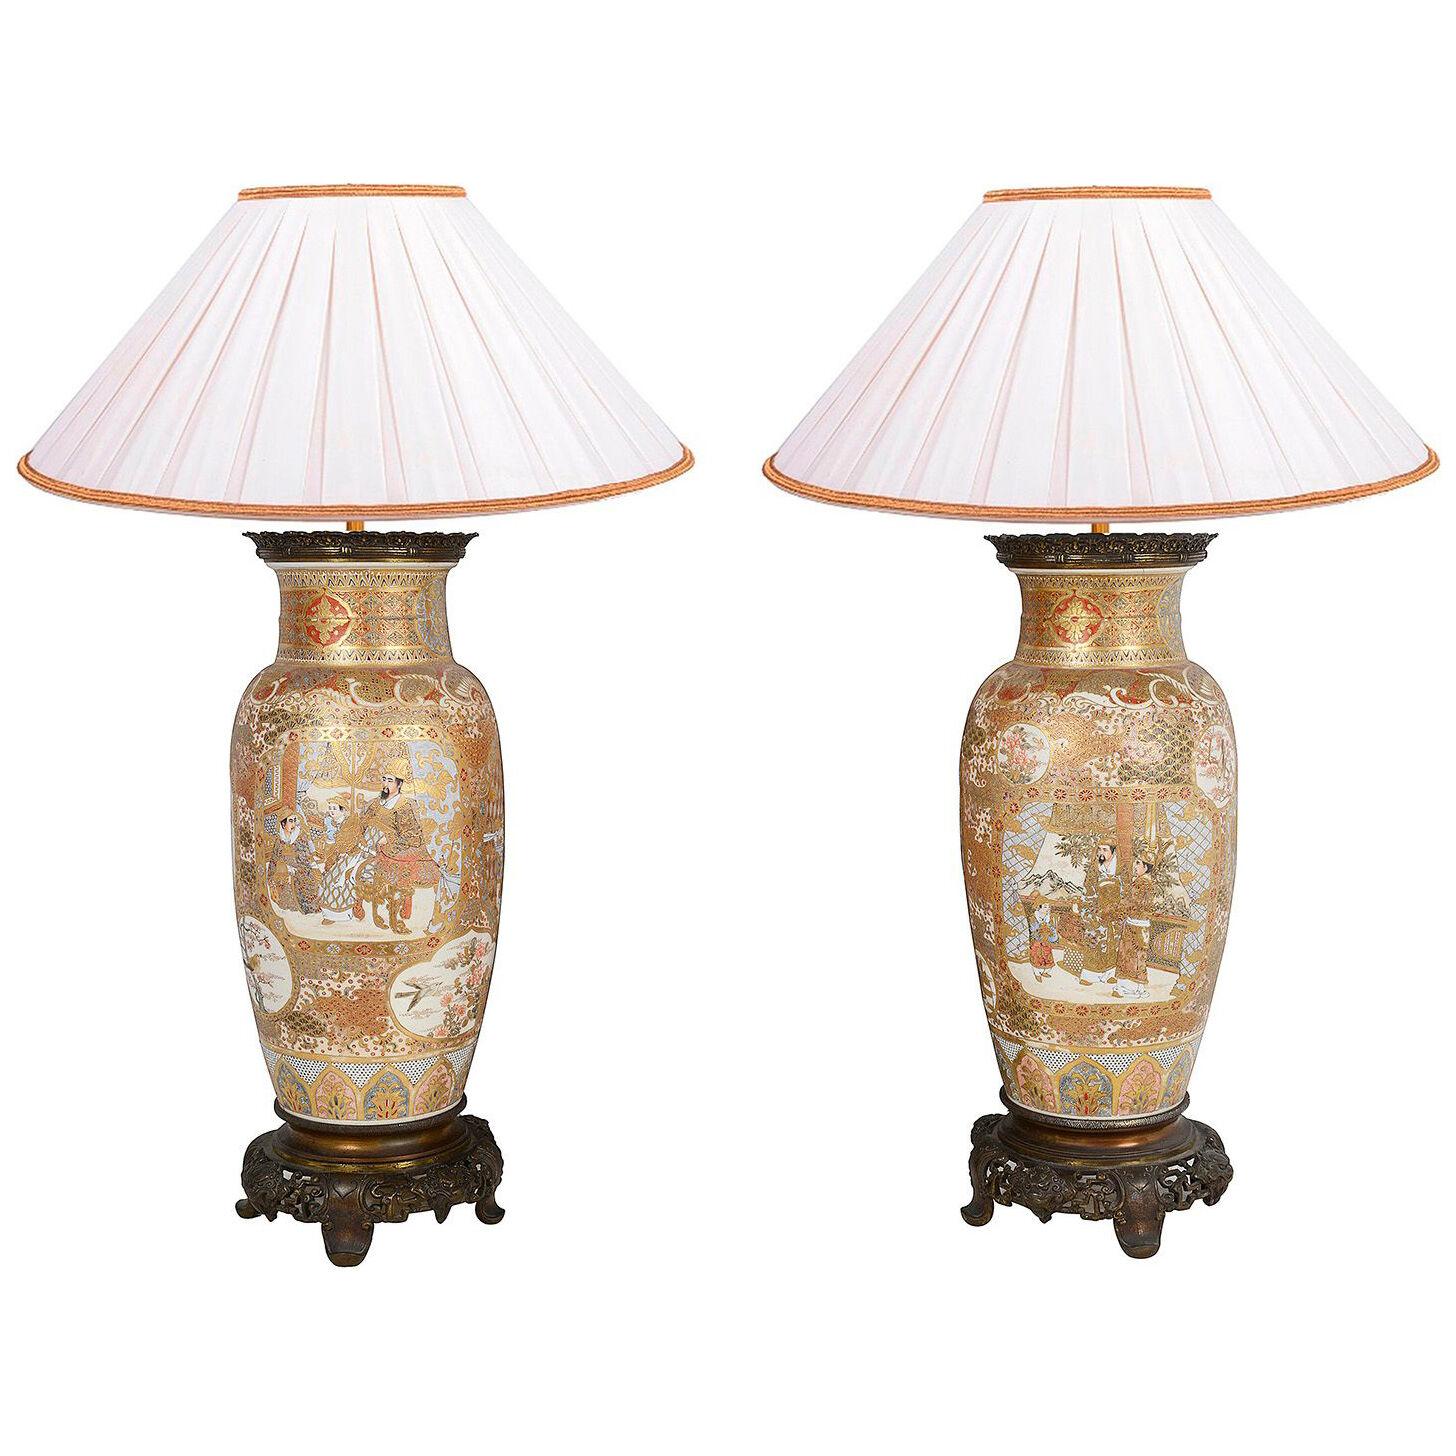 Pair 19th Century Japanese Satsuma vases / lamps.